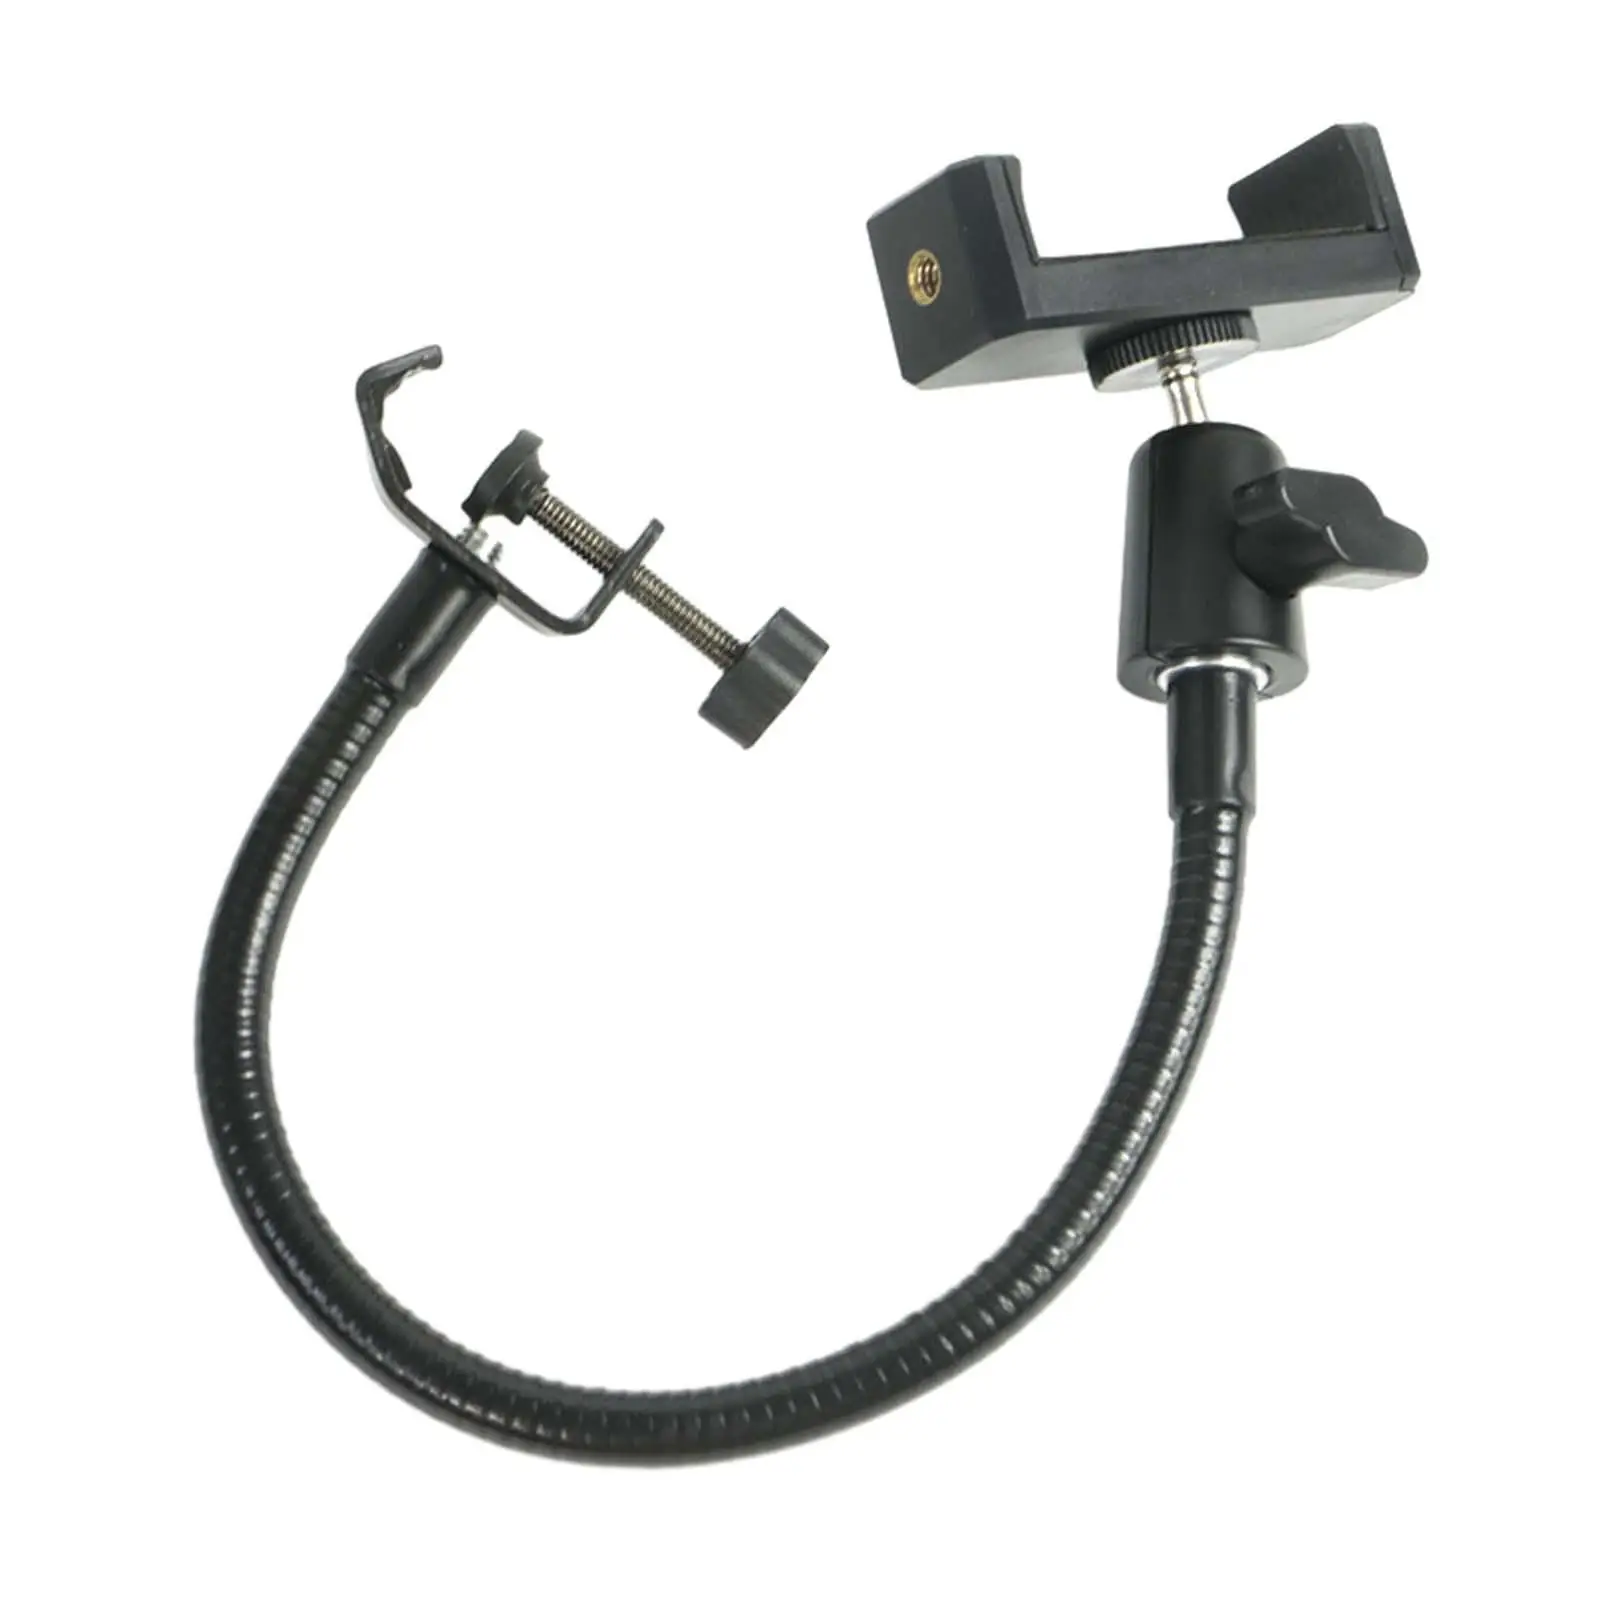 Mic Stands Holder 360° Adjustable Portable Bracket for Meeting Singing TV Stations Radio Broadcasting Studio Equipment